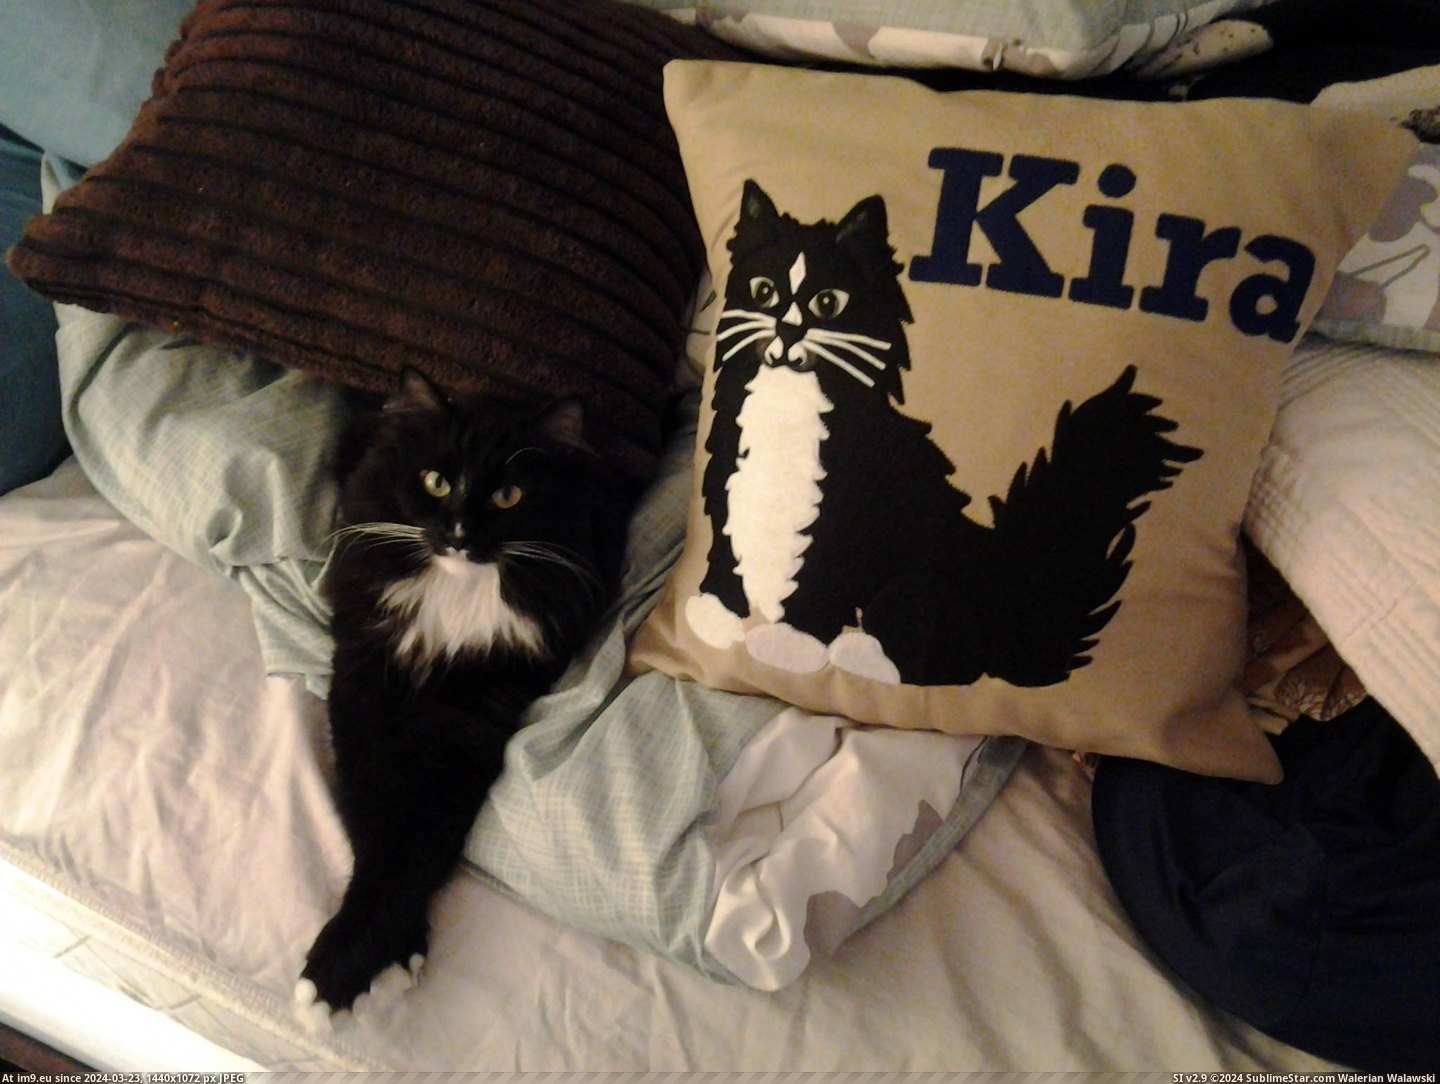 #Cats #Kira #Pillow #Posing [Cats] Kira posing next to her pillow Pic. (Bild von album My r/CATS favs))